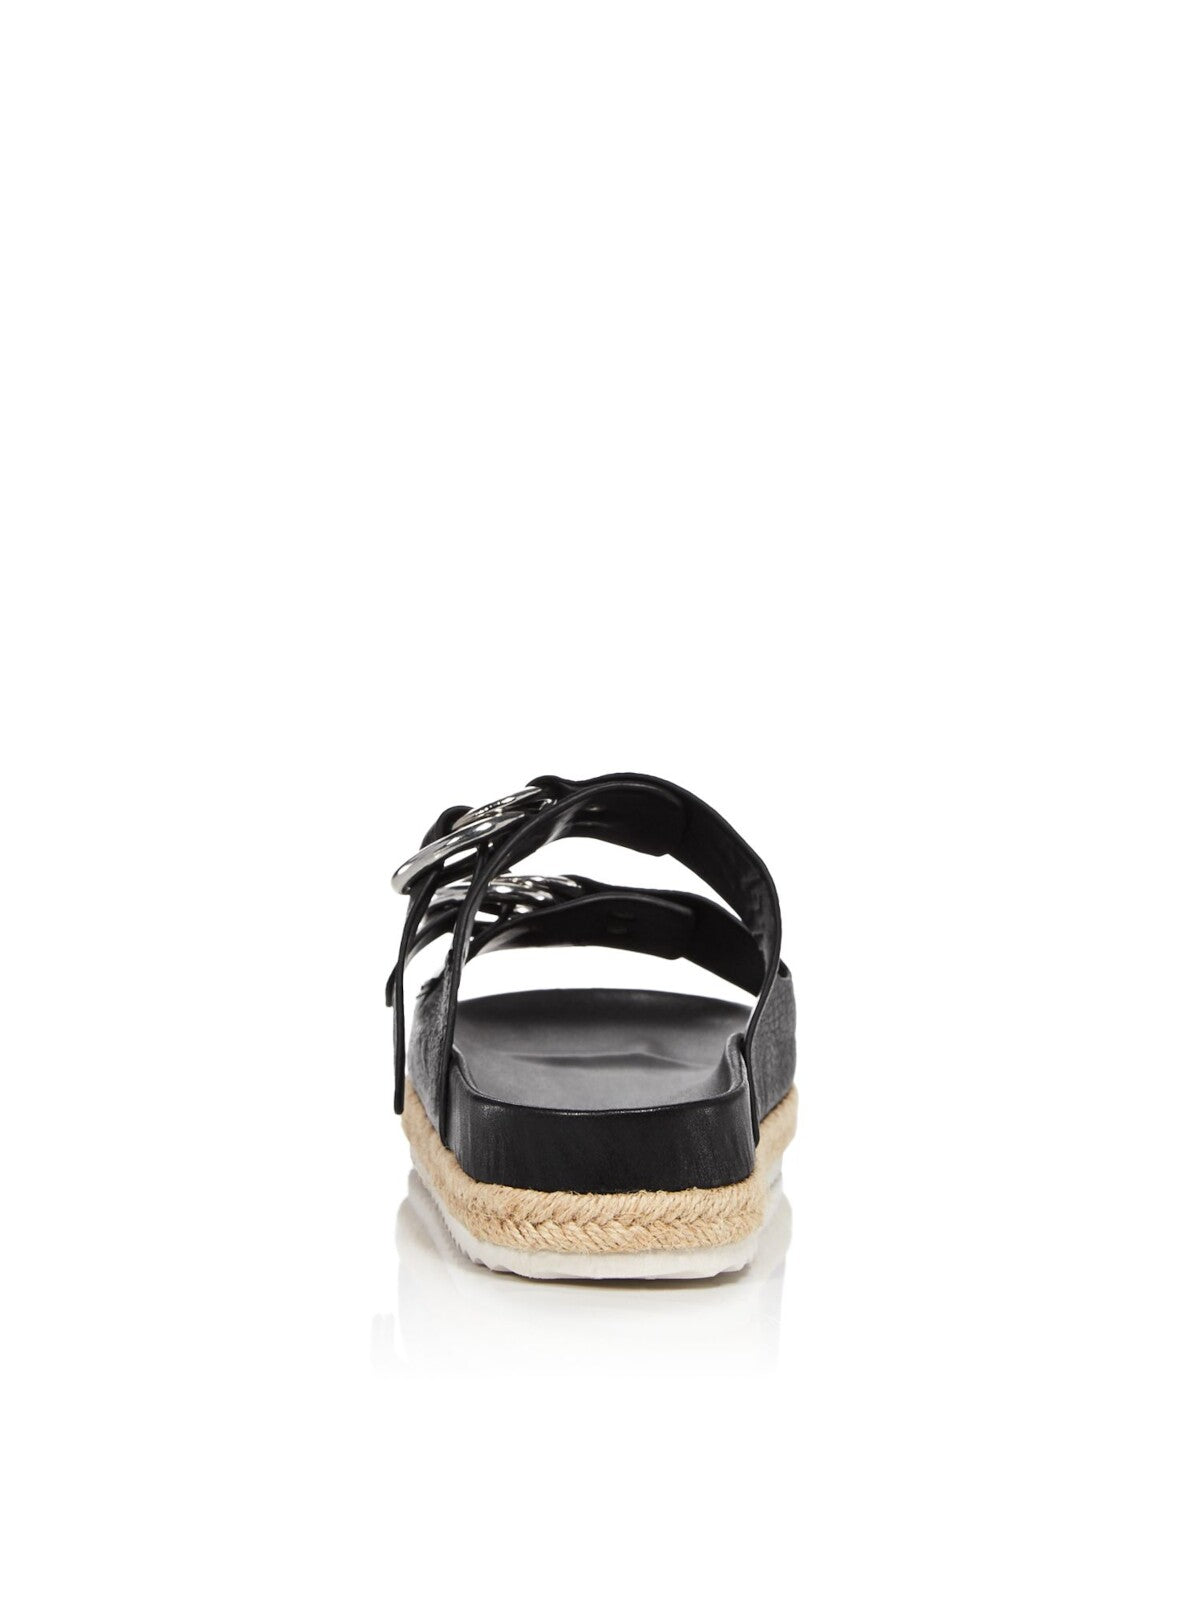 AQUA Womens Black Buckle Accent Studded Kai Round Toe Platform Slip On Leather Espadrille Shoes 6.5 M